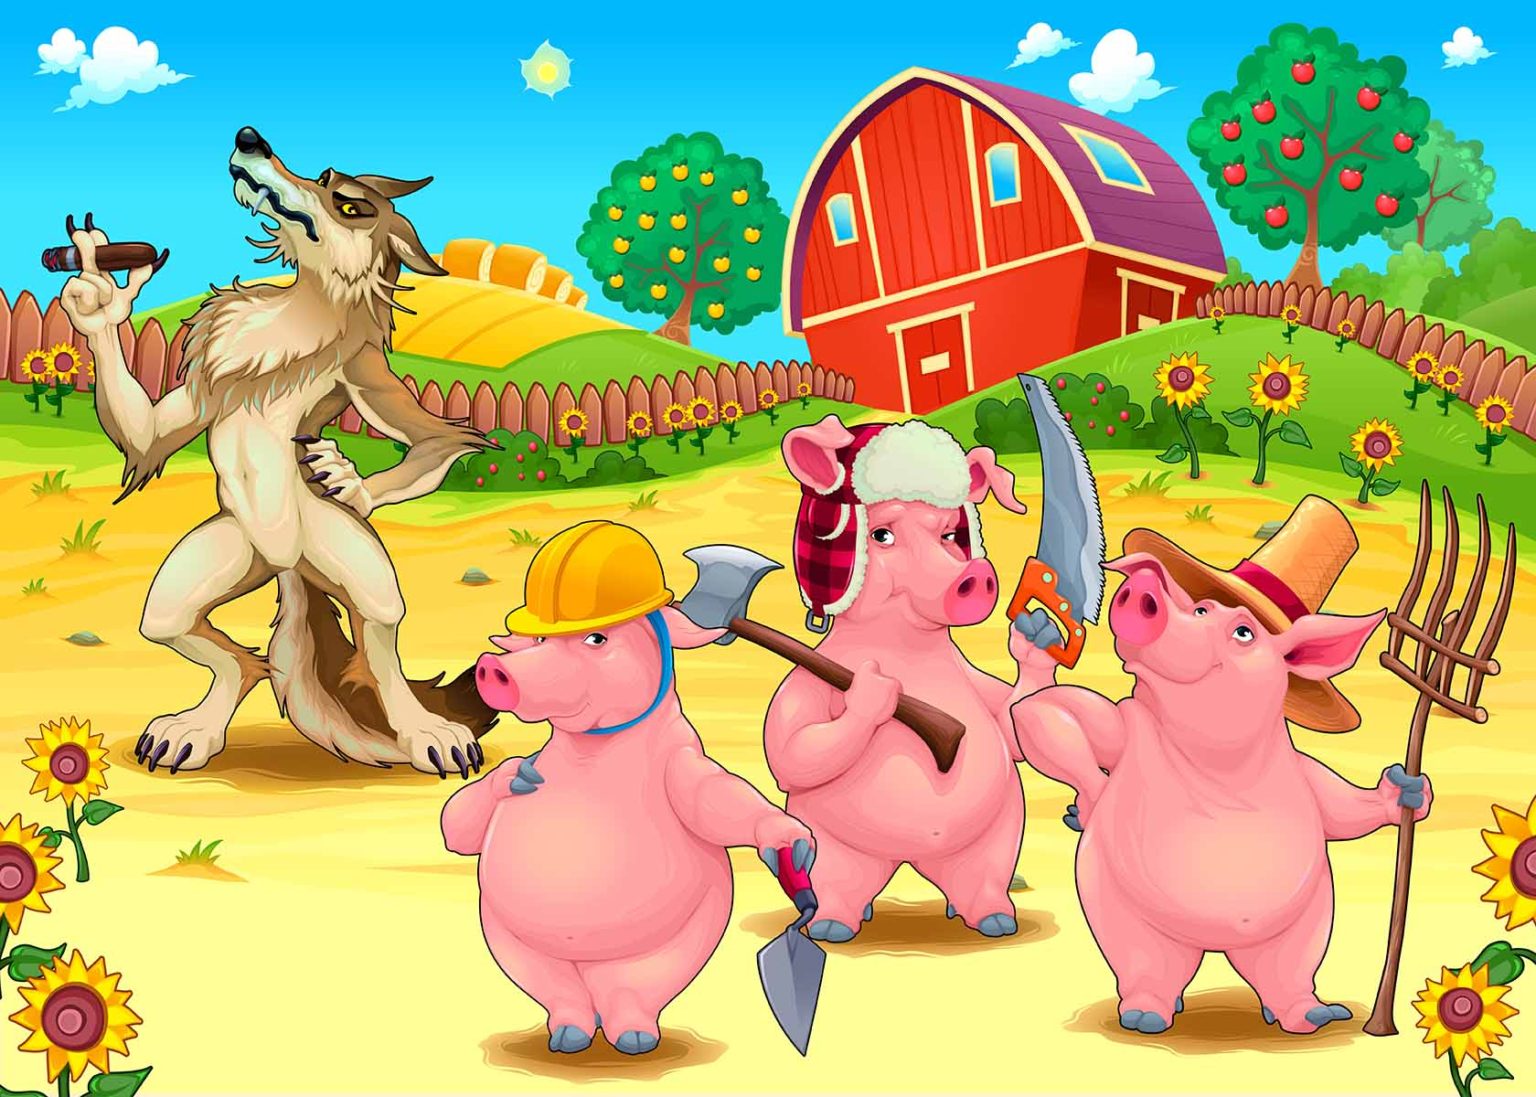 Three little pigs and bad wolf. Cartoon vector fairytale illustration.